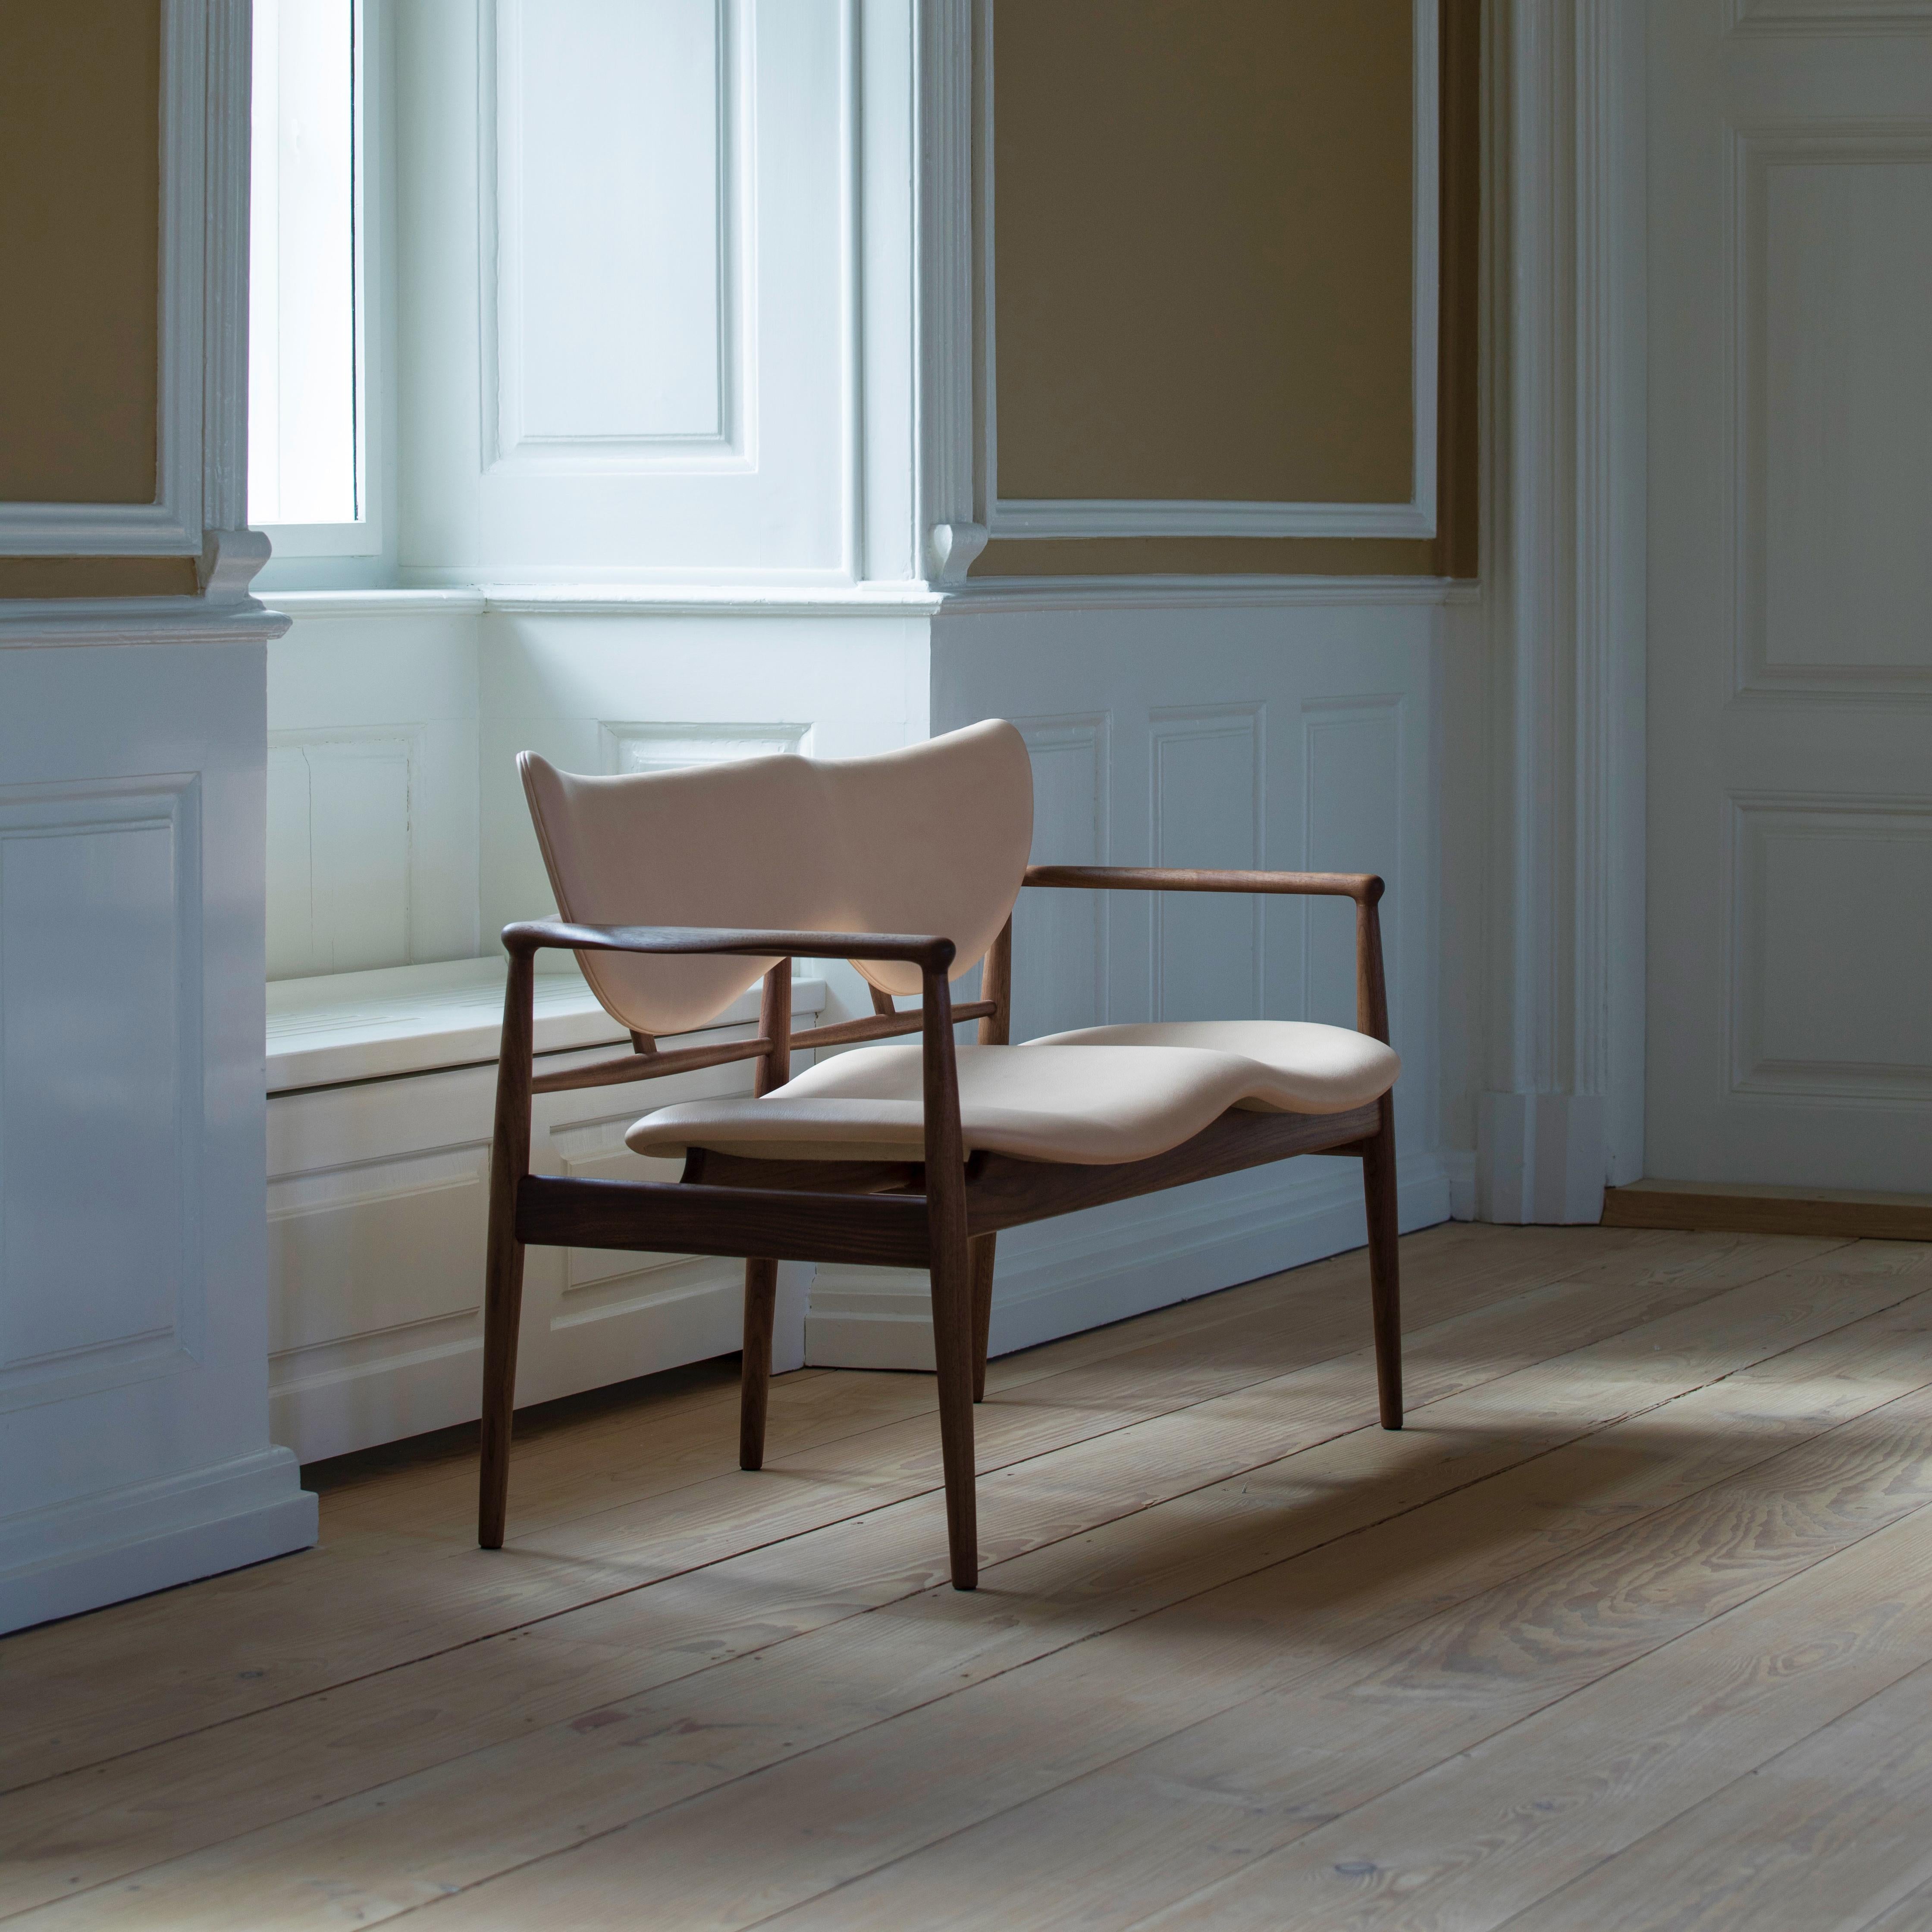 Finn Juhl 48 Sofa Bench Wood and Leather Iconic Danish Modern Design 6